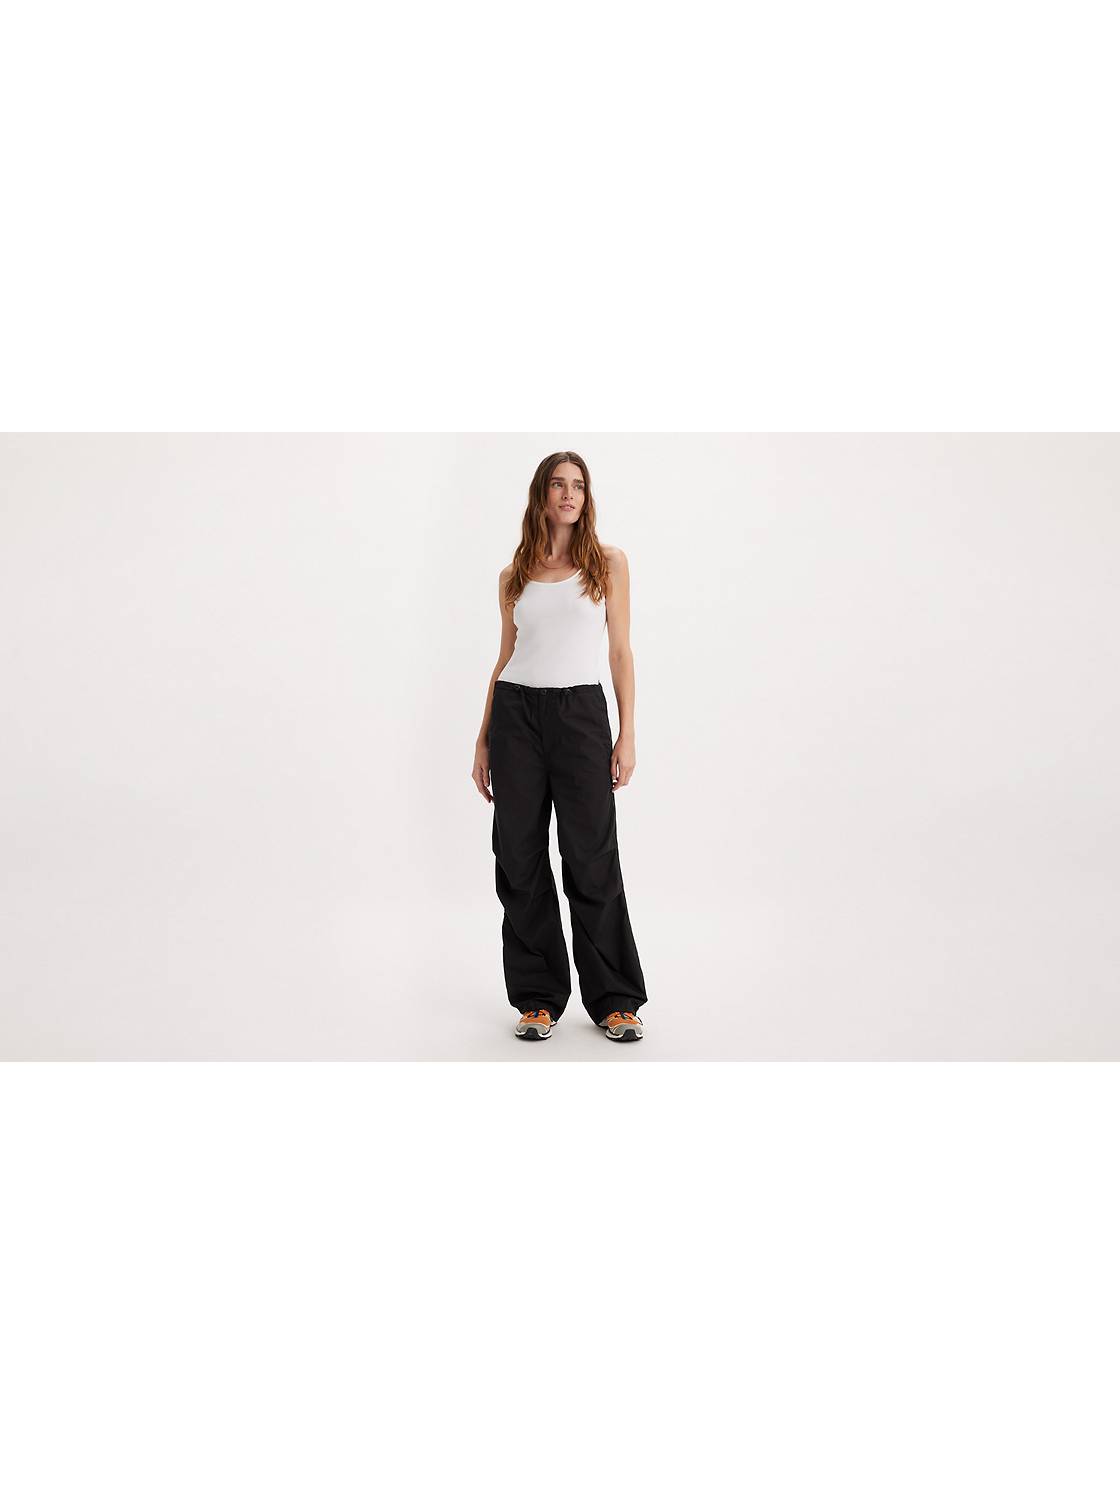 Women's Pants - Shop Pants & Trousers for Women